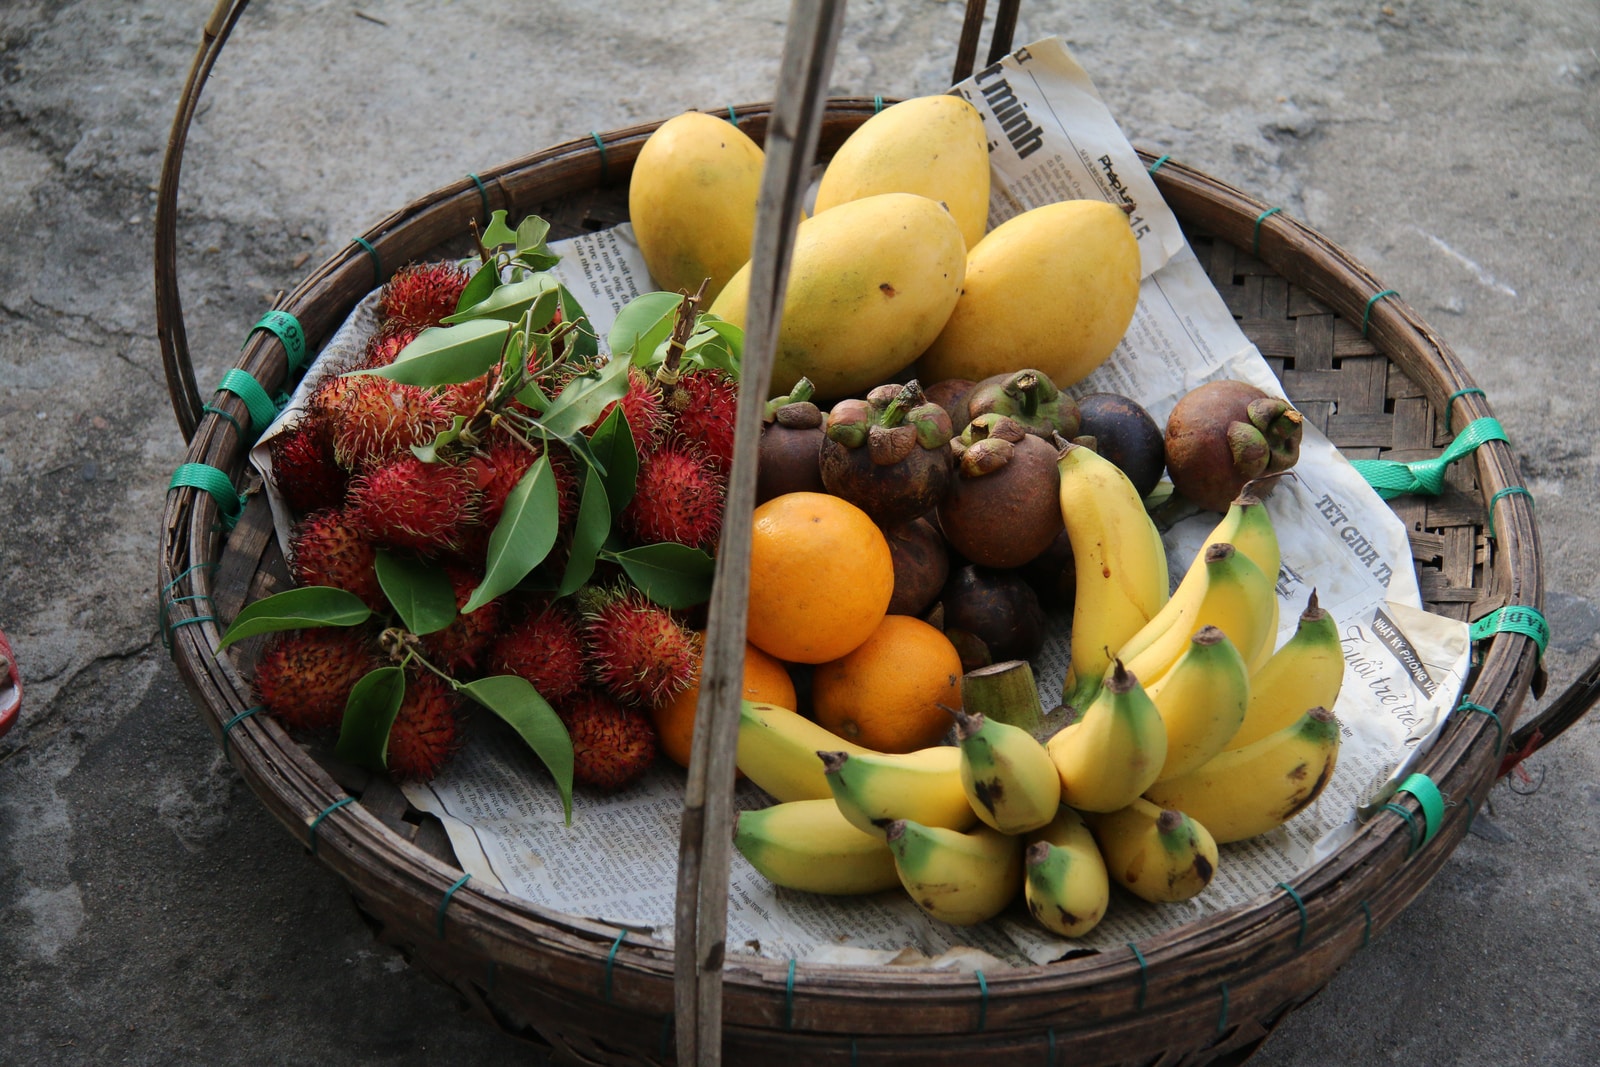 basket of yellow bananas, yellow mangoes, red rambutan fruits, oranges, and mangosteen fruits